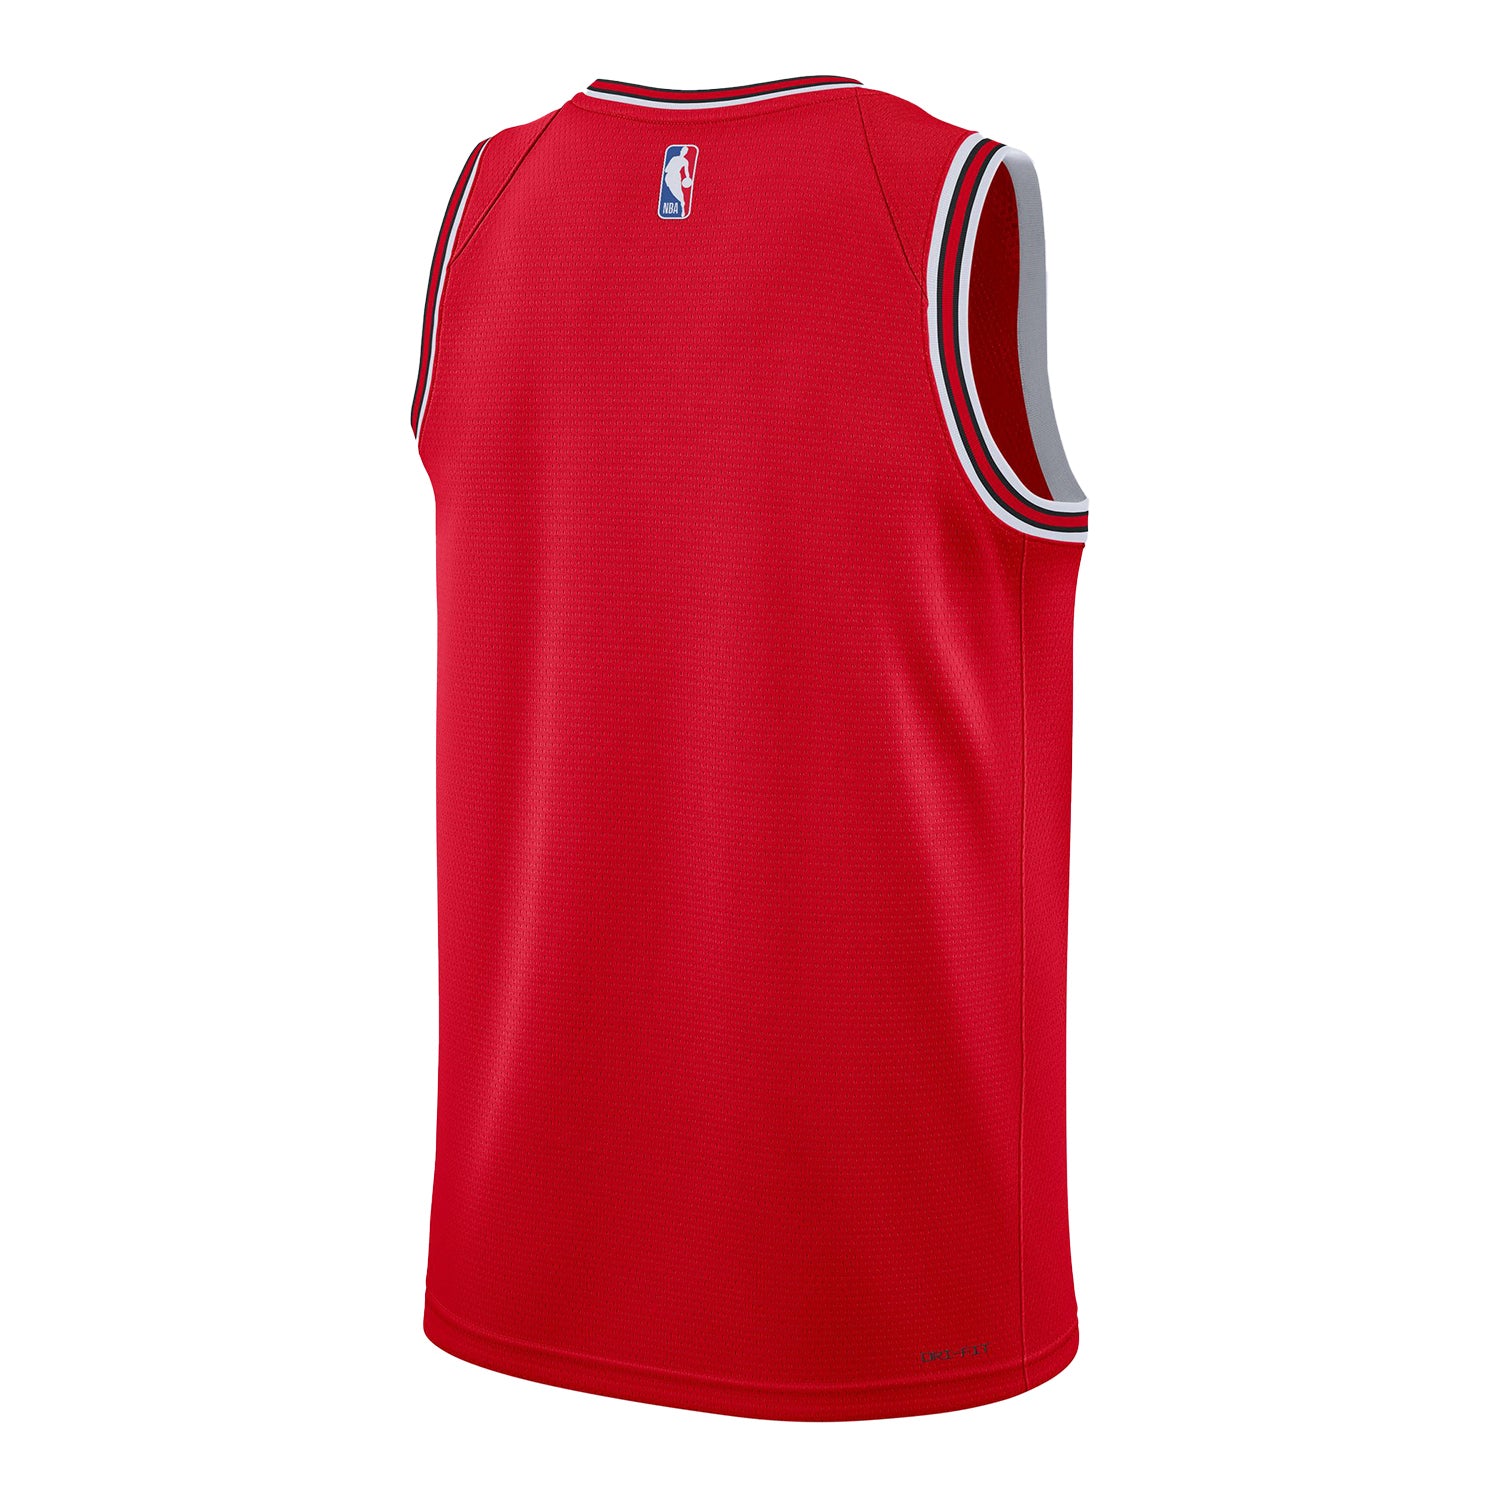 Chicago Bulls City Edition Men's Nike Dri-FIT NBA Swingman Shorts